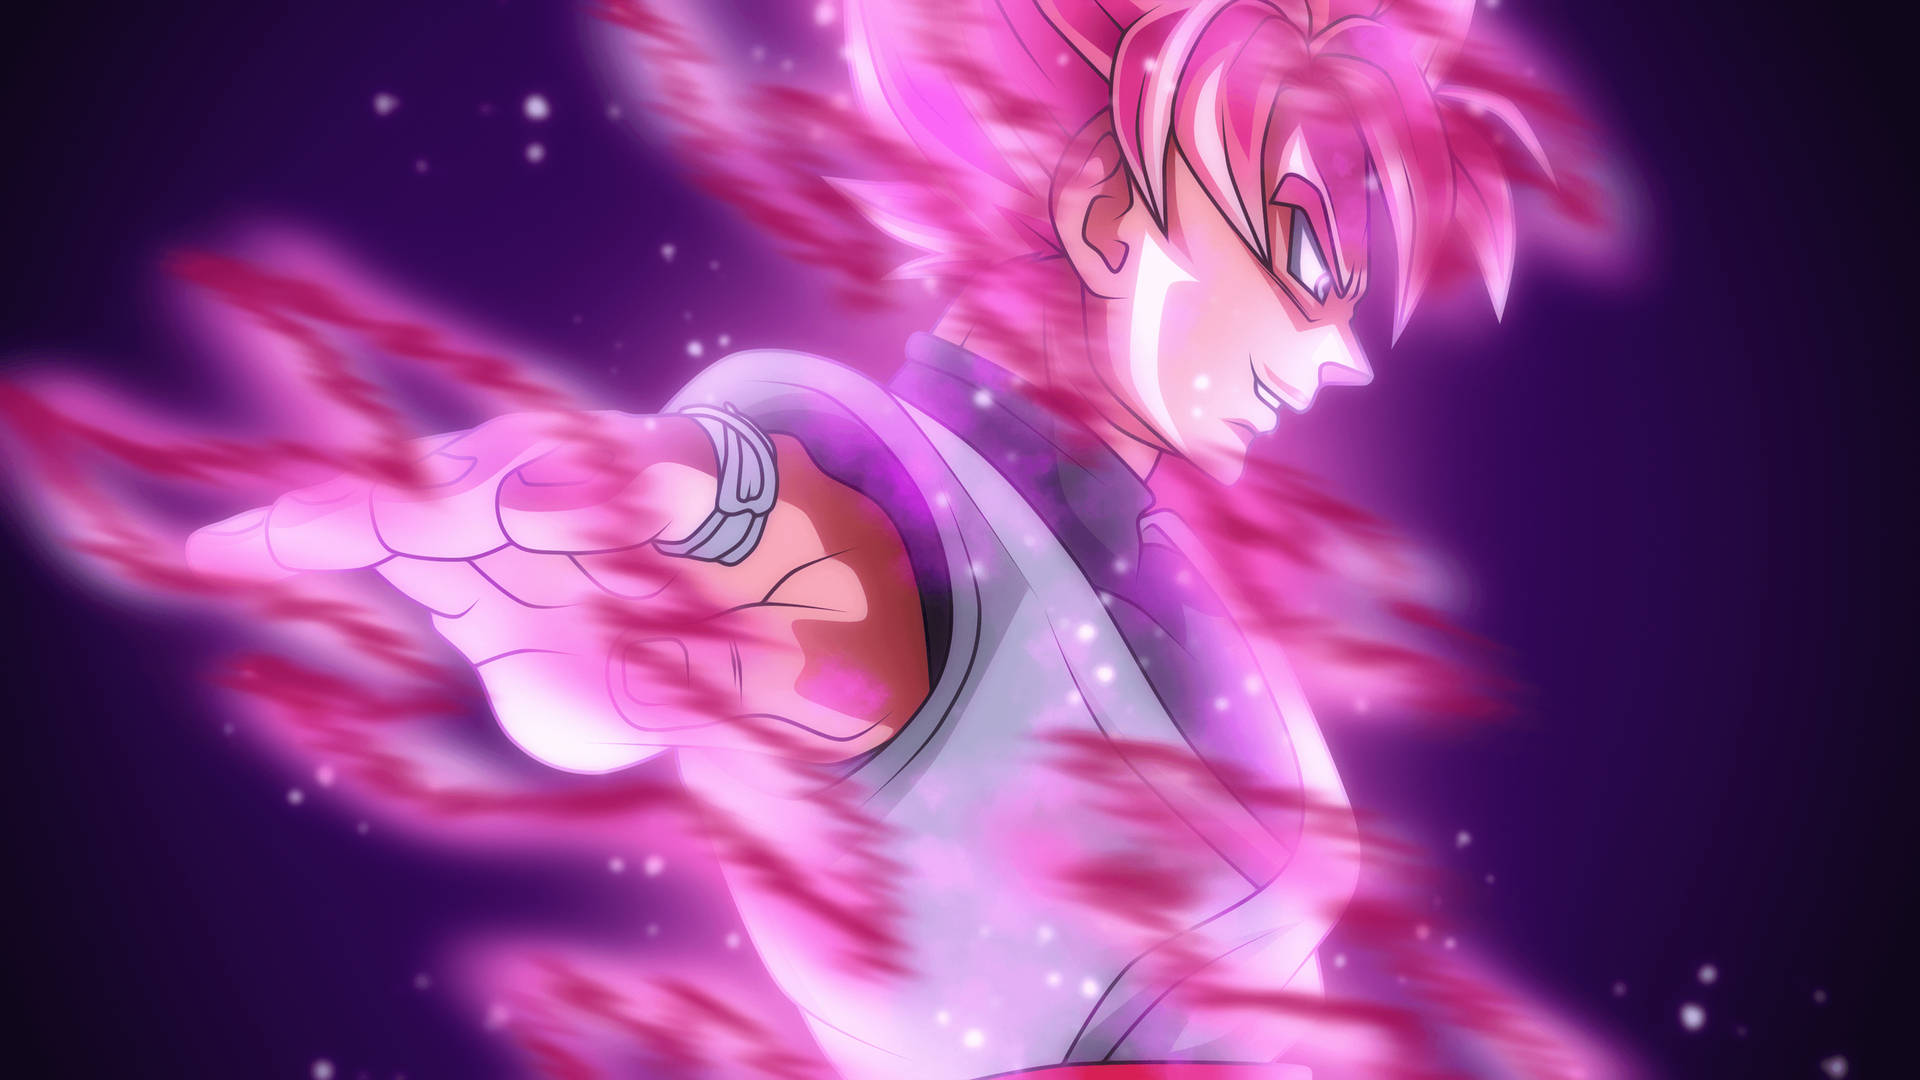 Caption: Intense Power - Black Goku In Super Saiyan Form Background